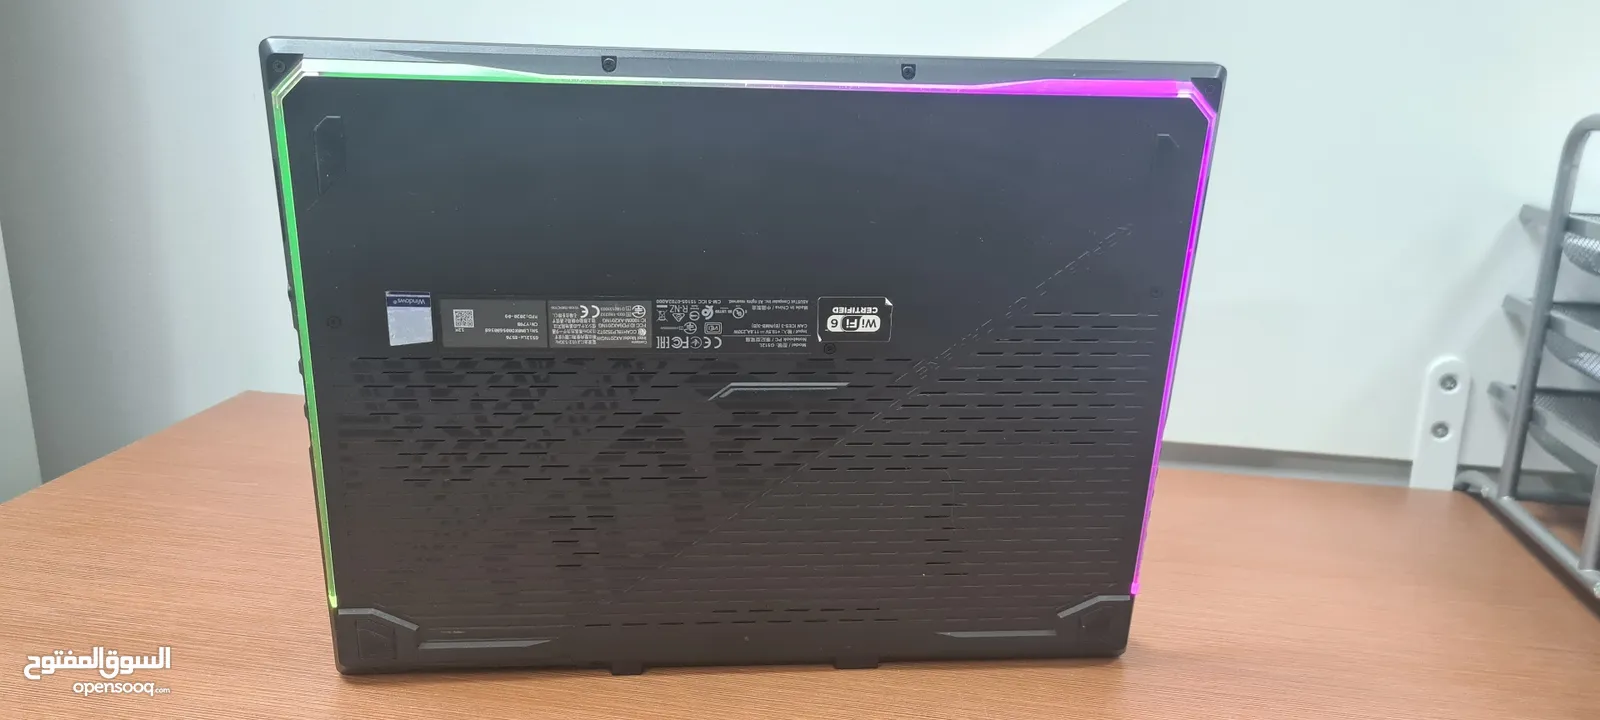 Gaming Laptop Asus ROG Strix G15 for sale